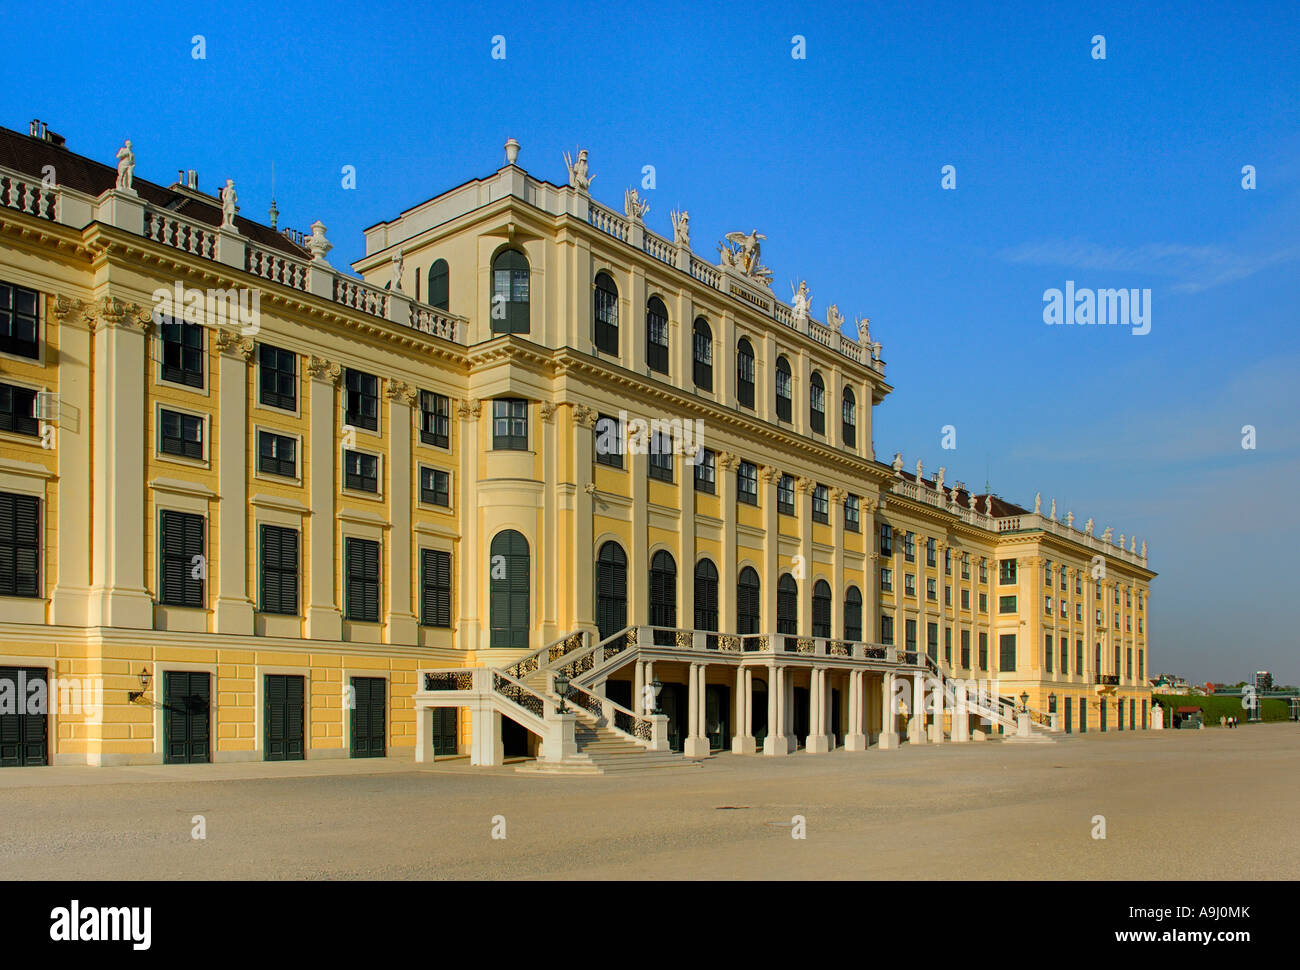 Schoenbrunn Palace, Vienna, Vienna, Austria Stock Photo